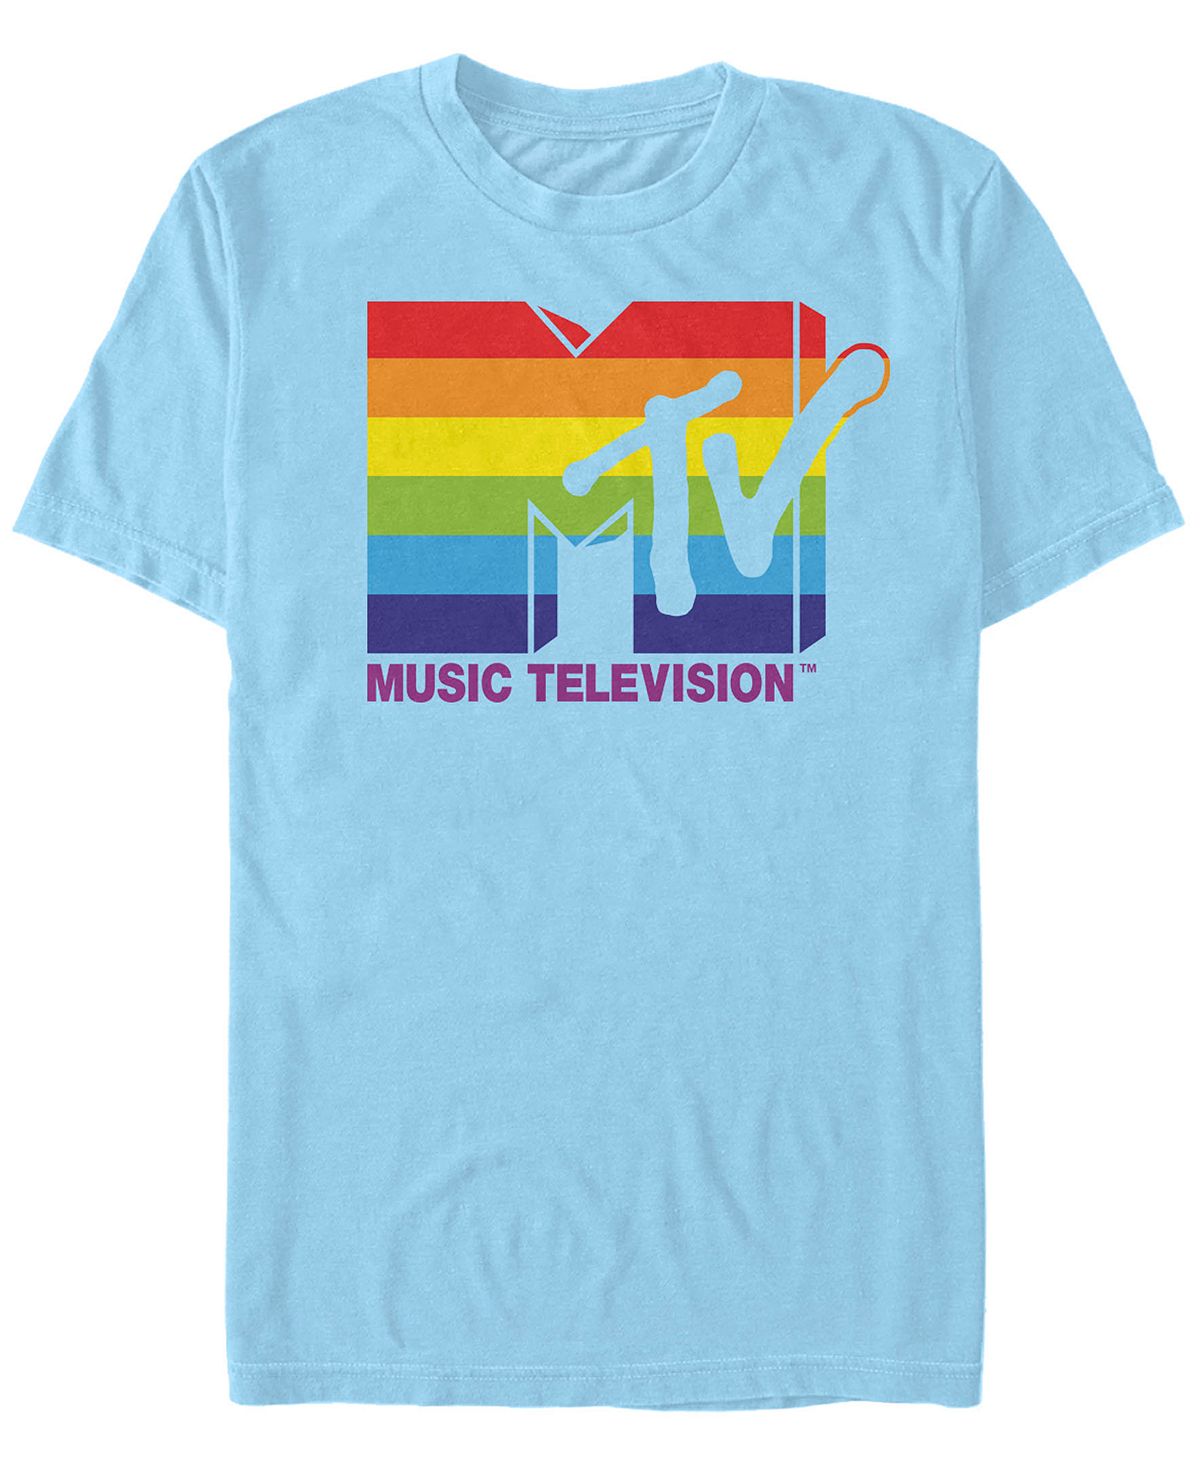 Мужская футболка с коротким рукавом с логотипом rainbow pride Fifth Sun, голубой пульт huayu для телевизора mystery mtv 3217lw